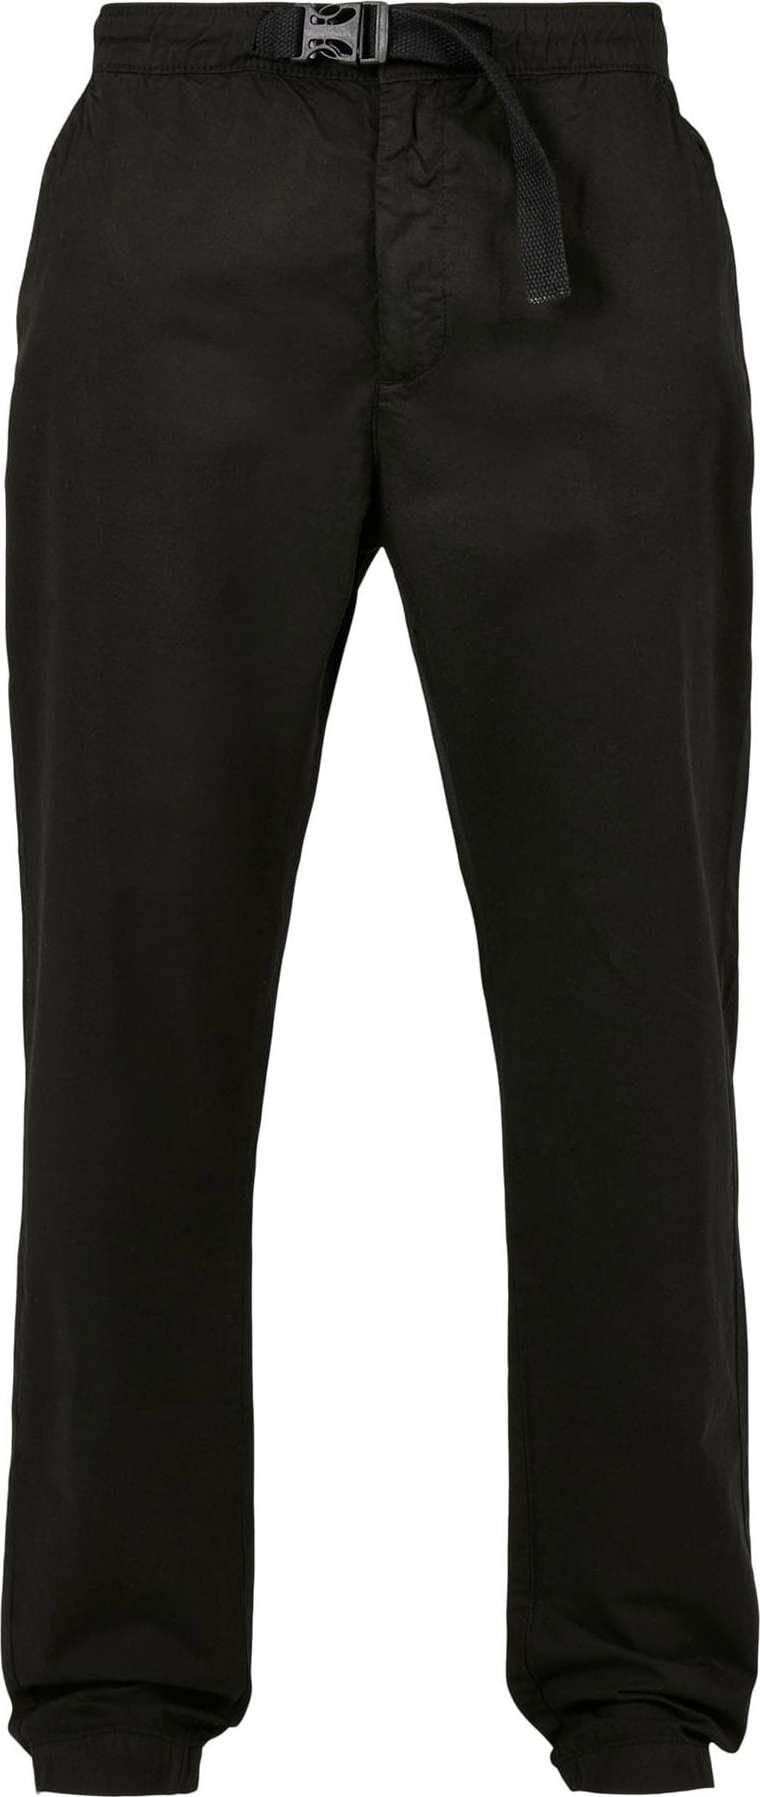 Chino kalhoty Urban Classics černá